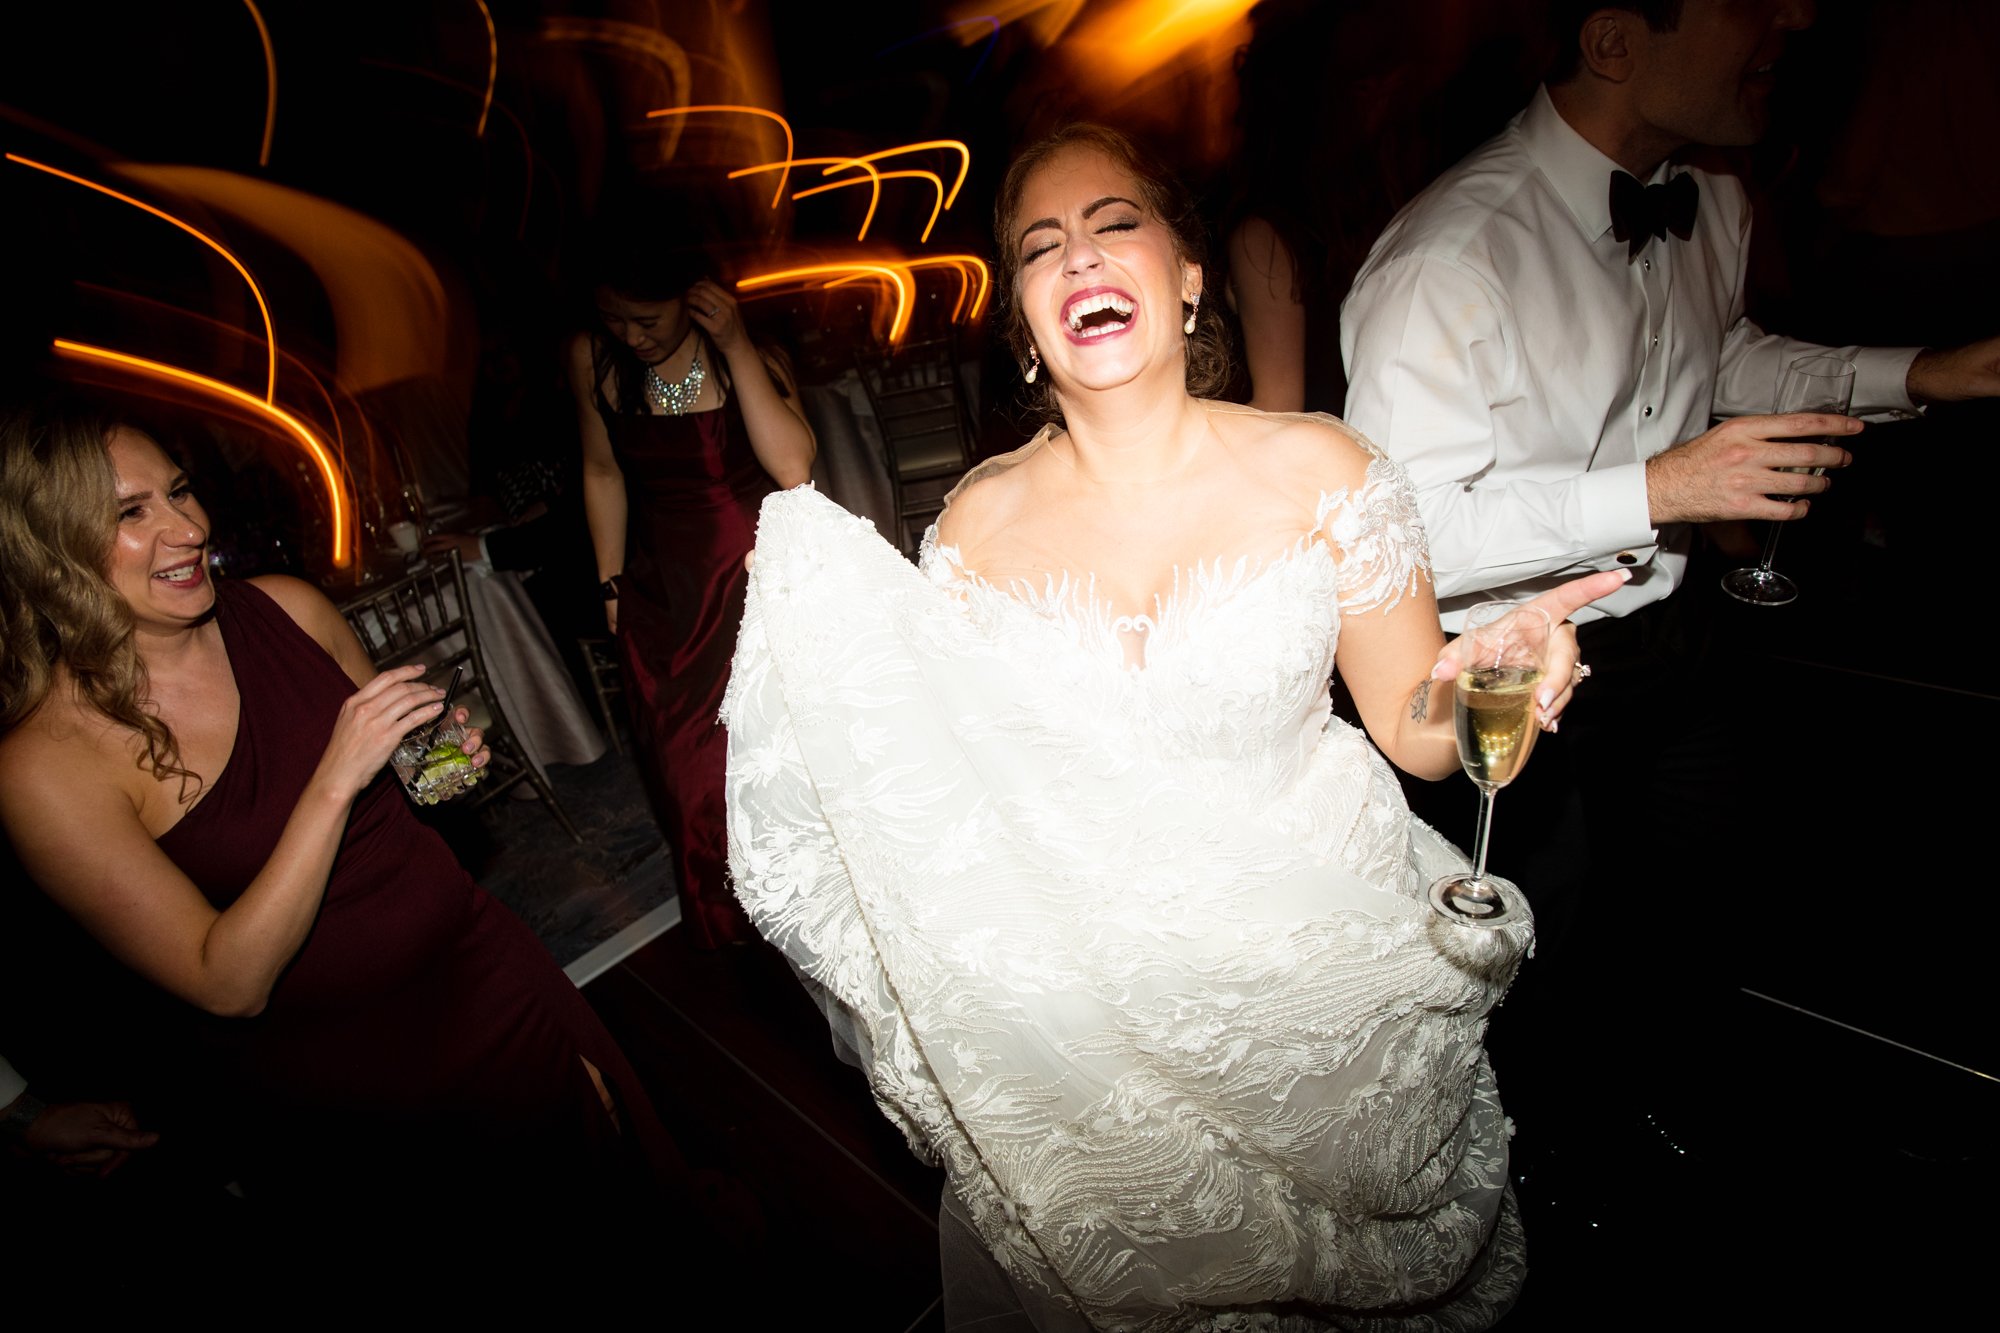  Four Seasons Hotel Washington DC Jewish Wedding by the best wedding documentary photographer Mantas Kubilinskas 